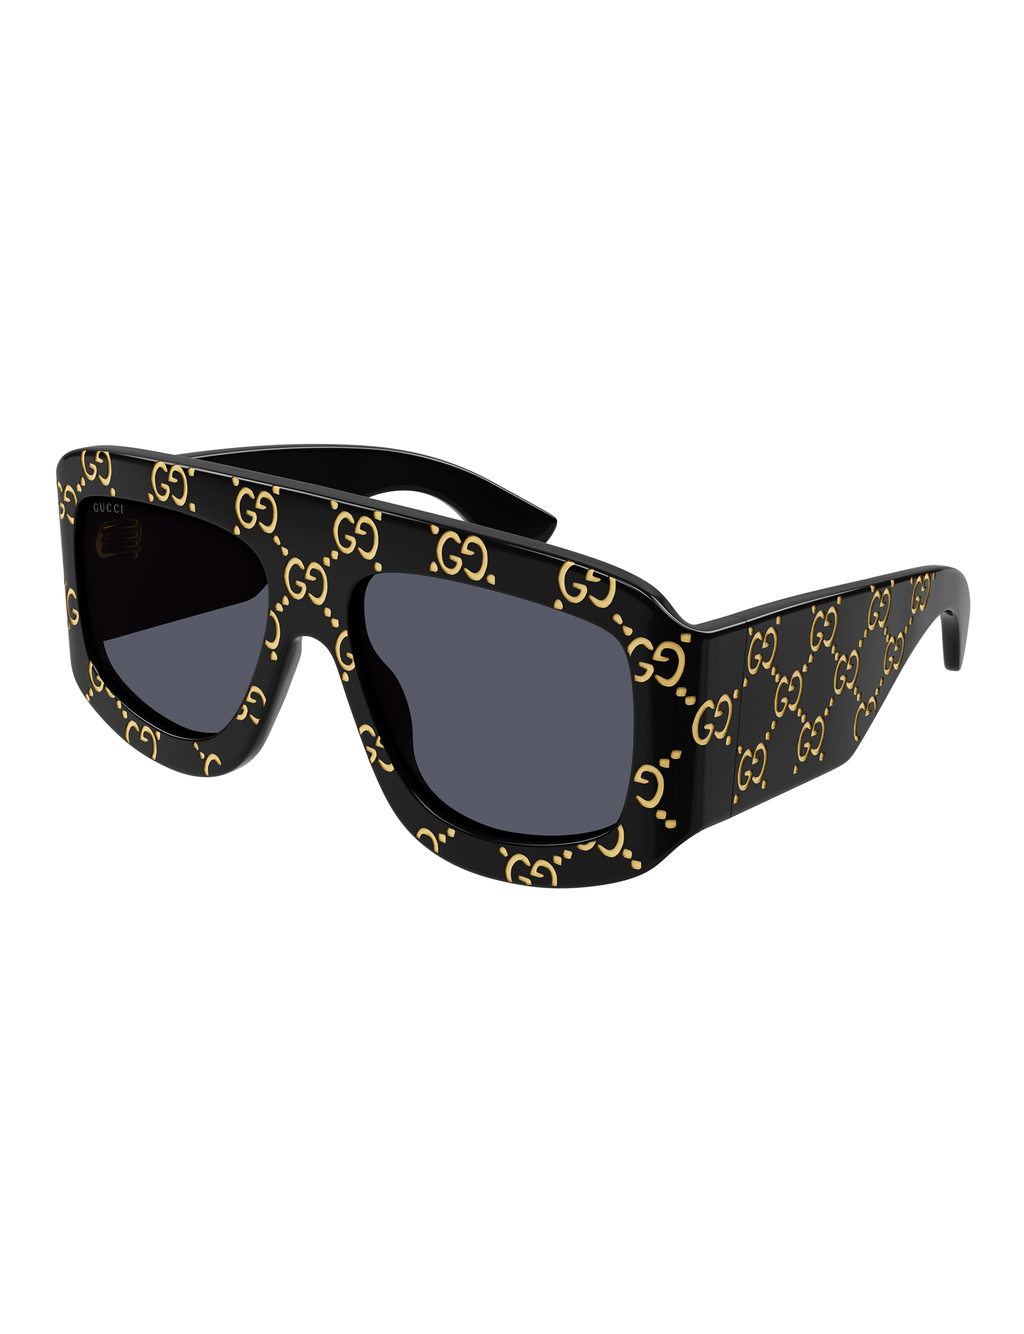 Logo Mask Sunglasses, Black